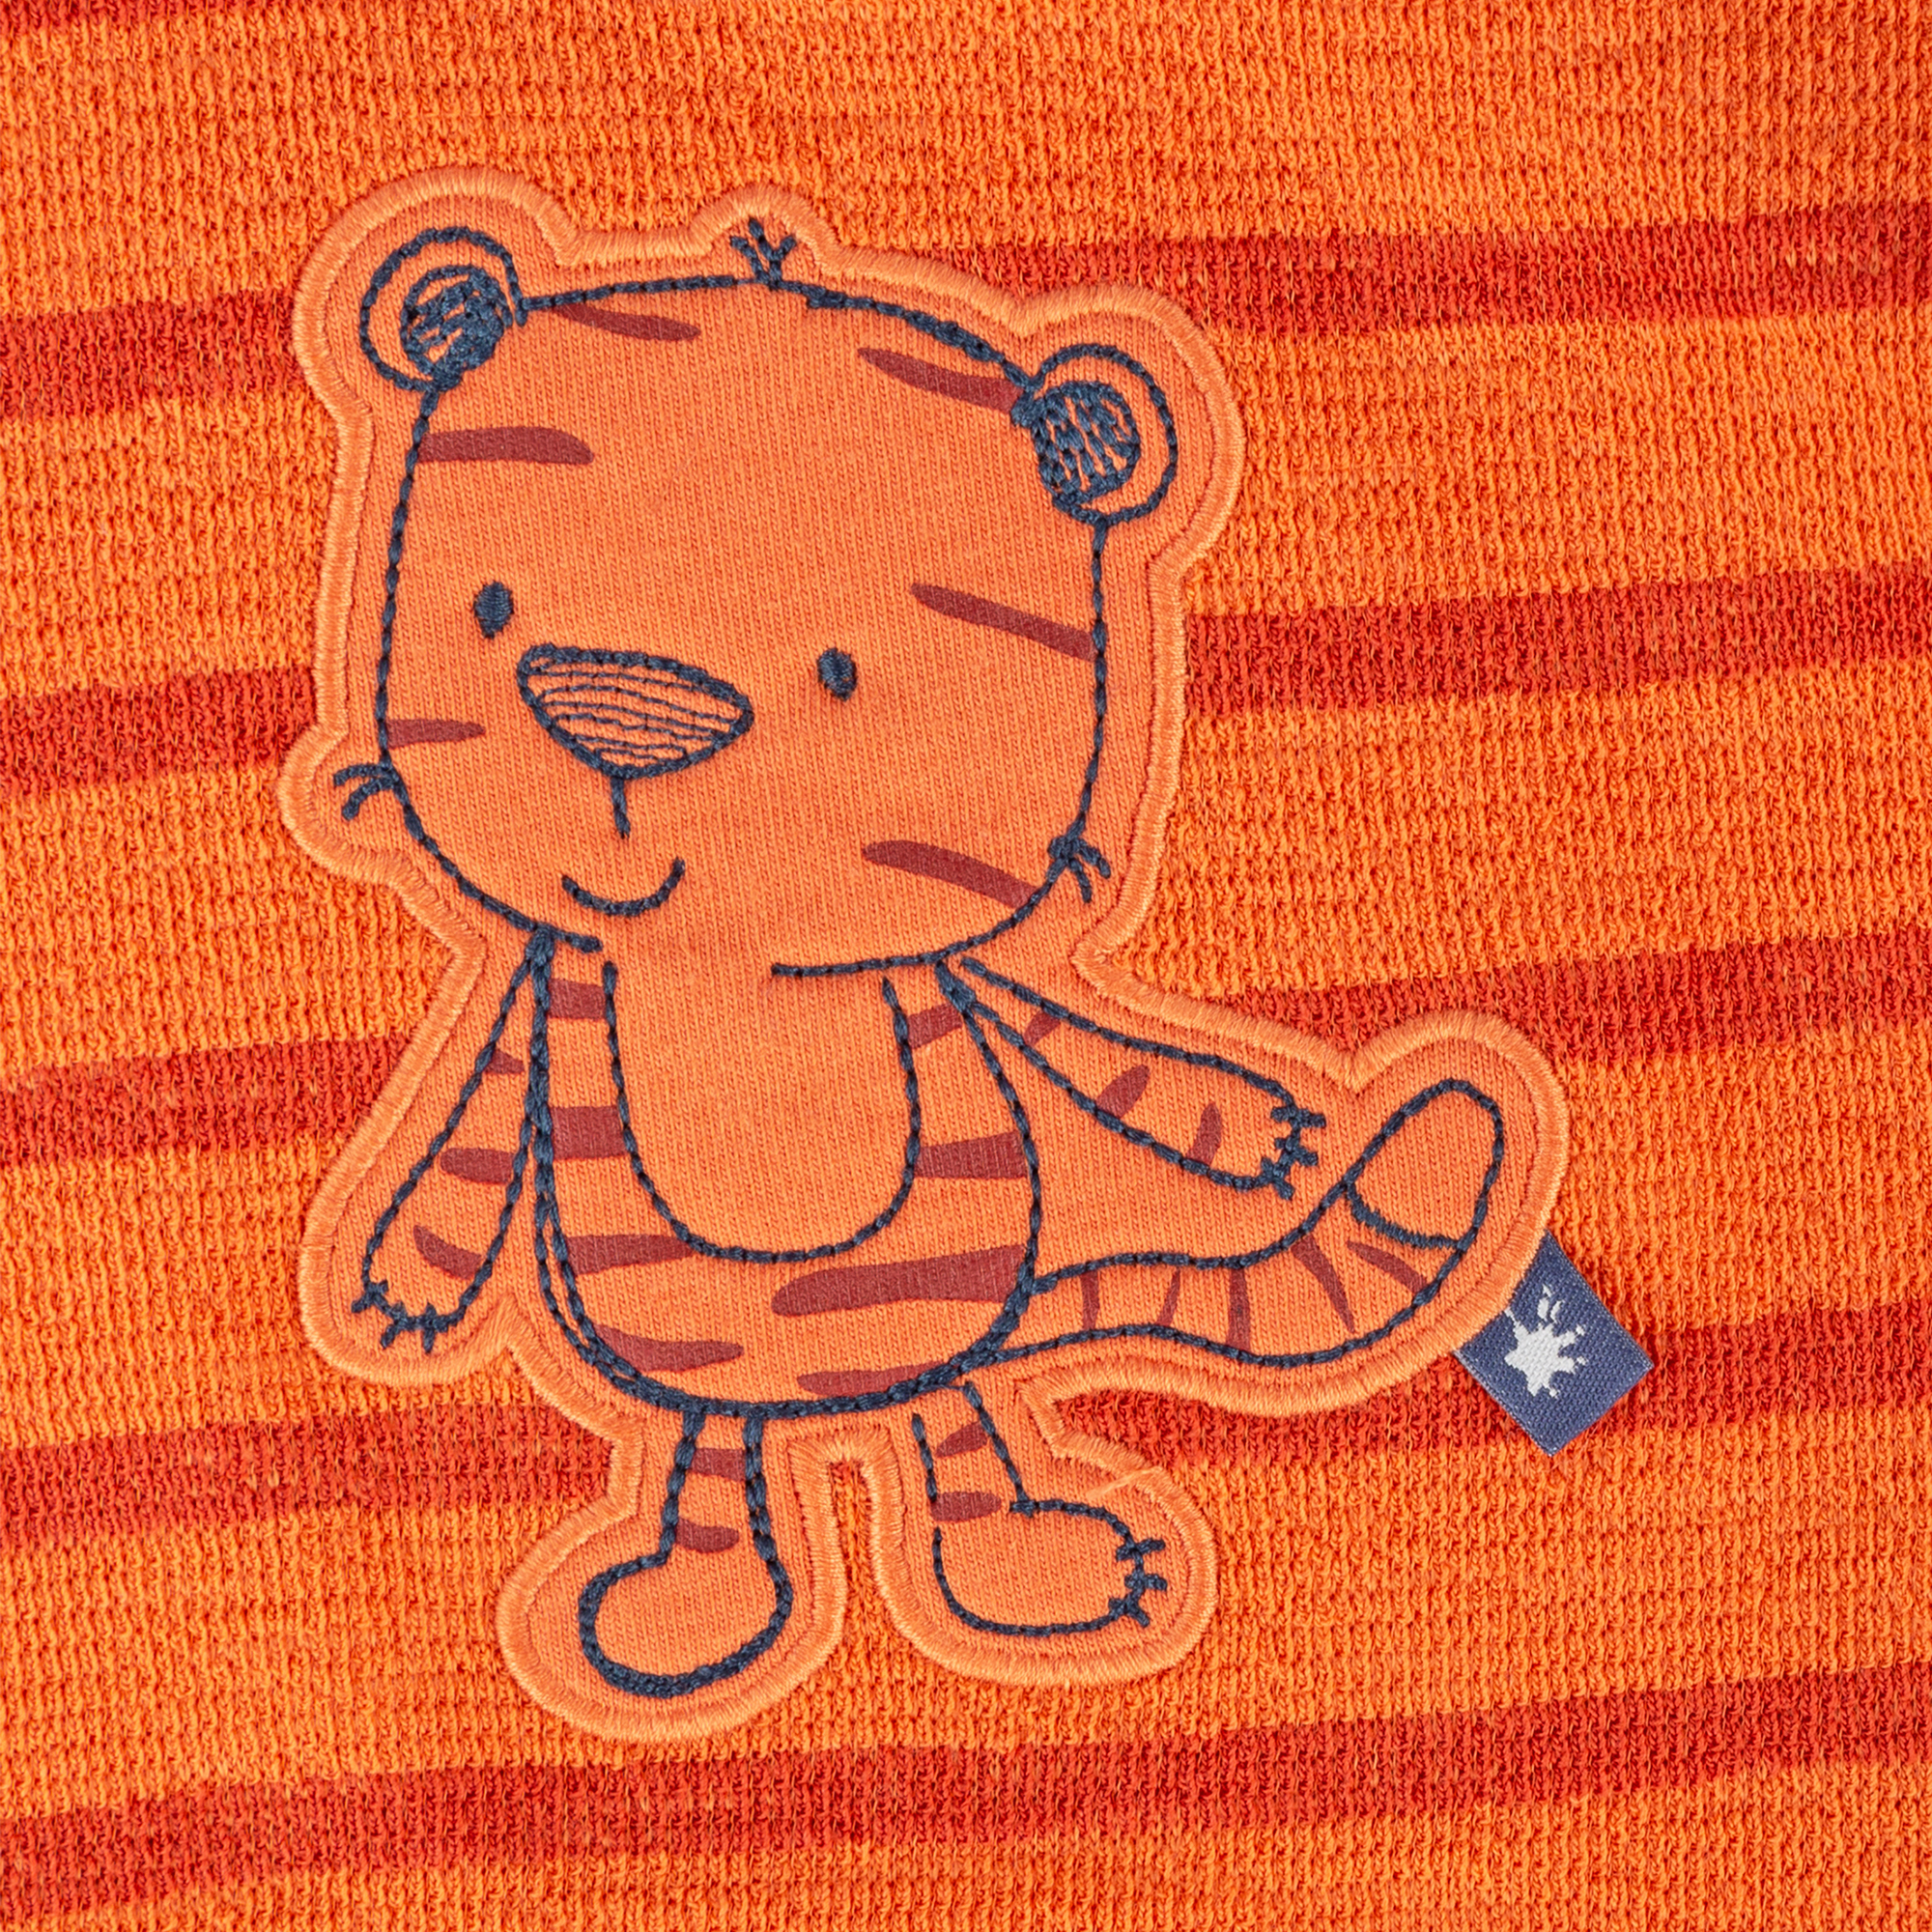 Super soft baby slub jersey T-shirt tiger, orange